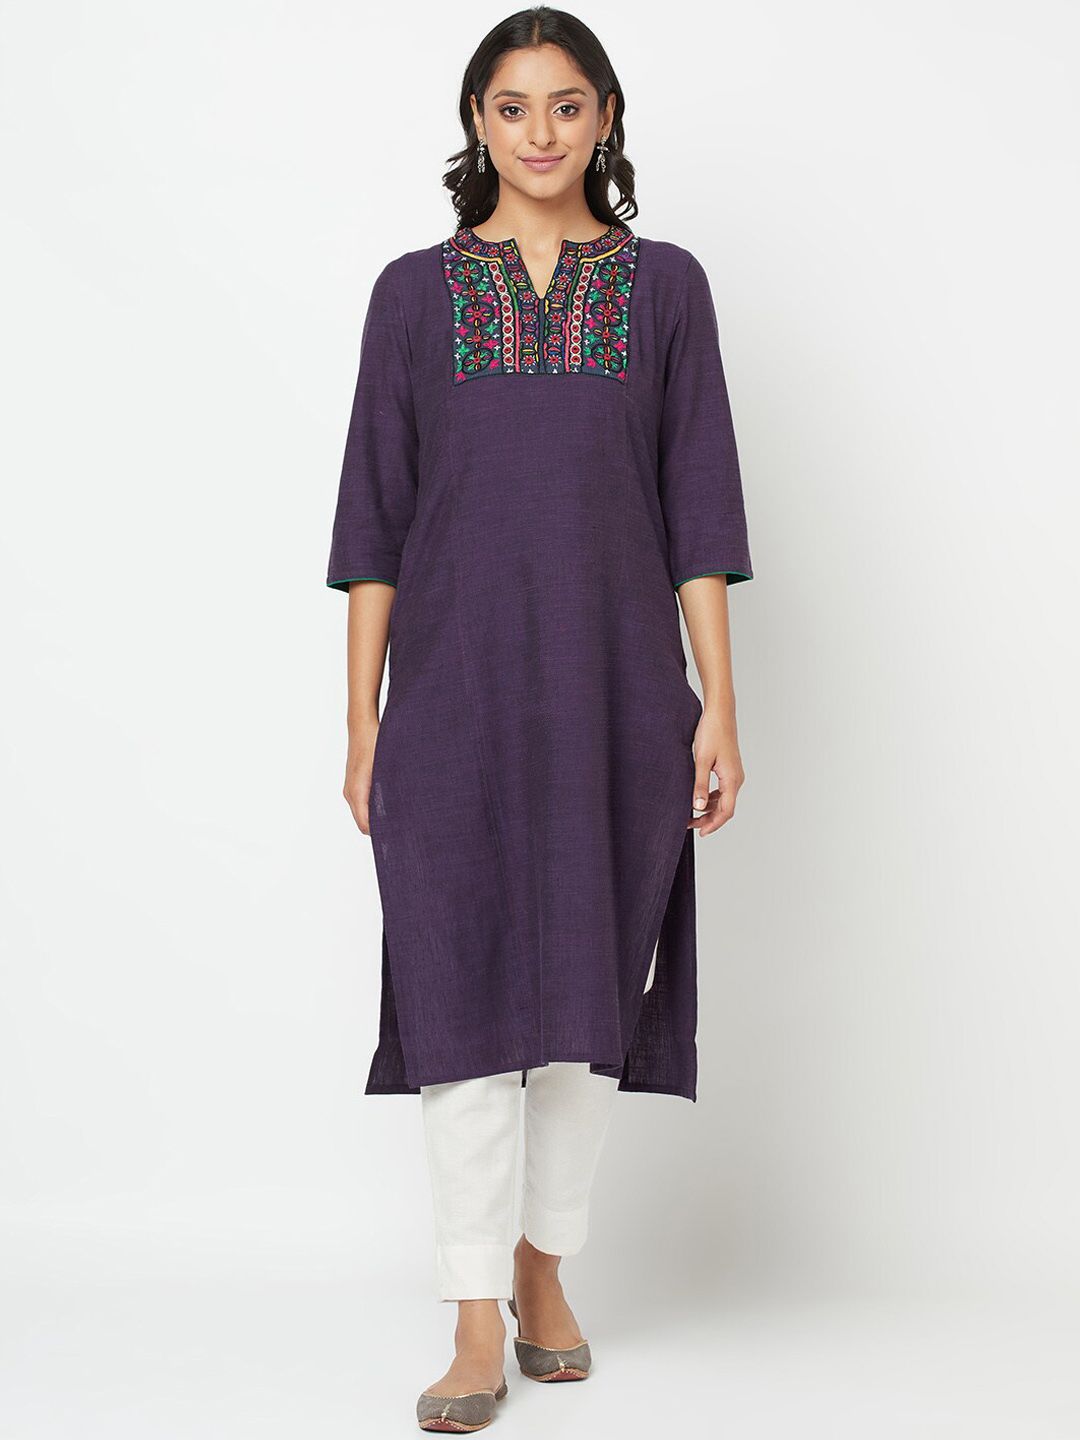 Fabindia Women Purple Embroidered Thread Work Kurta Price in India